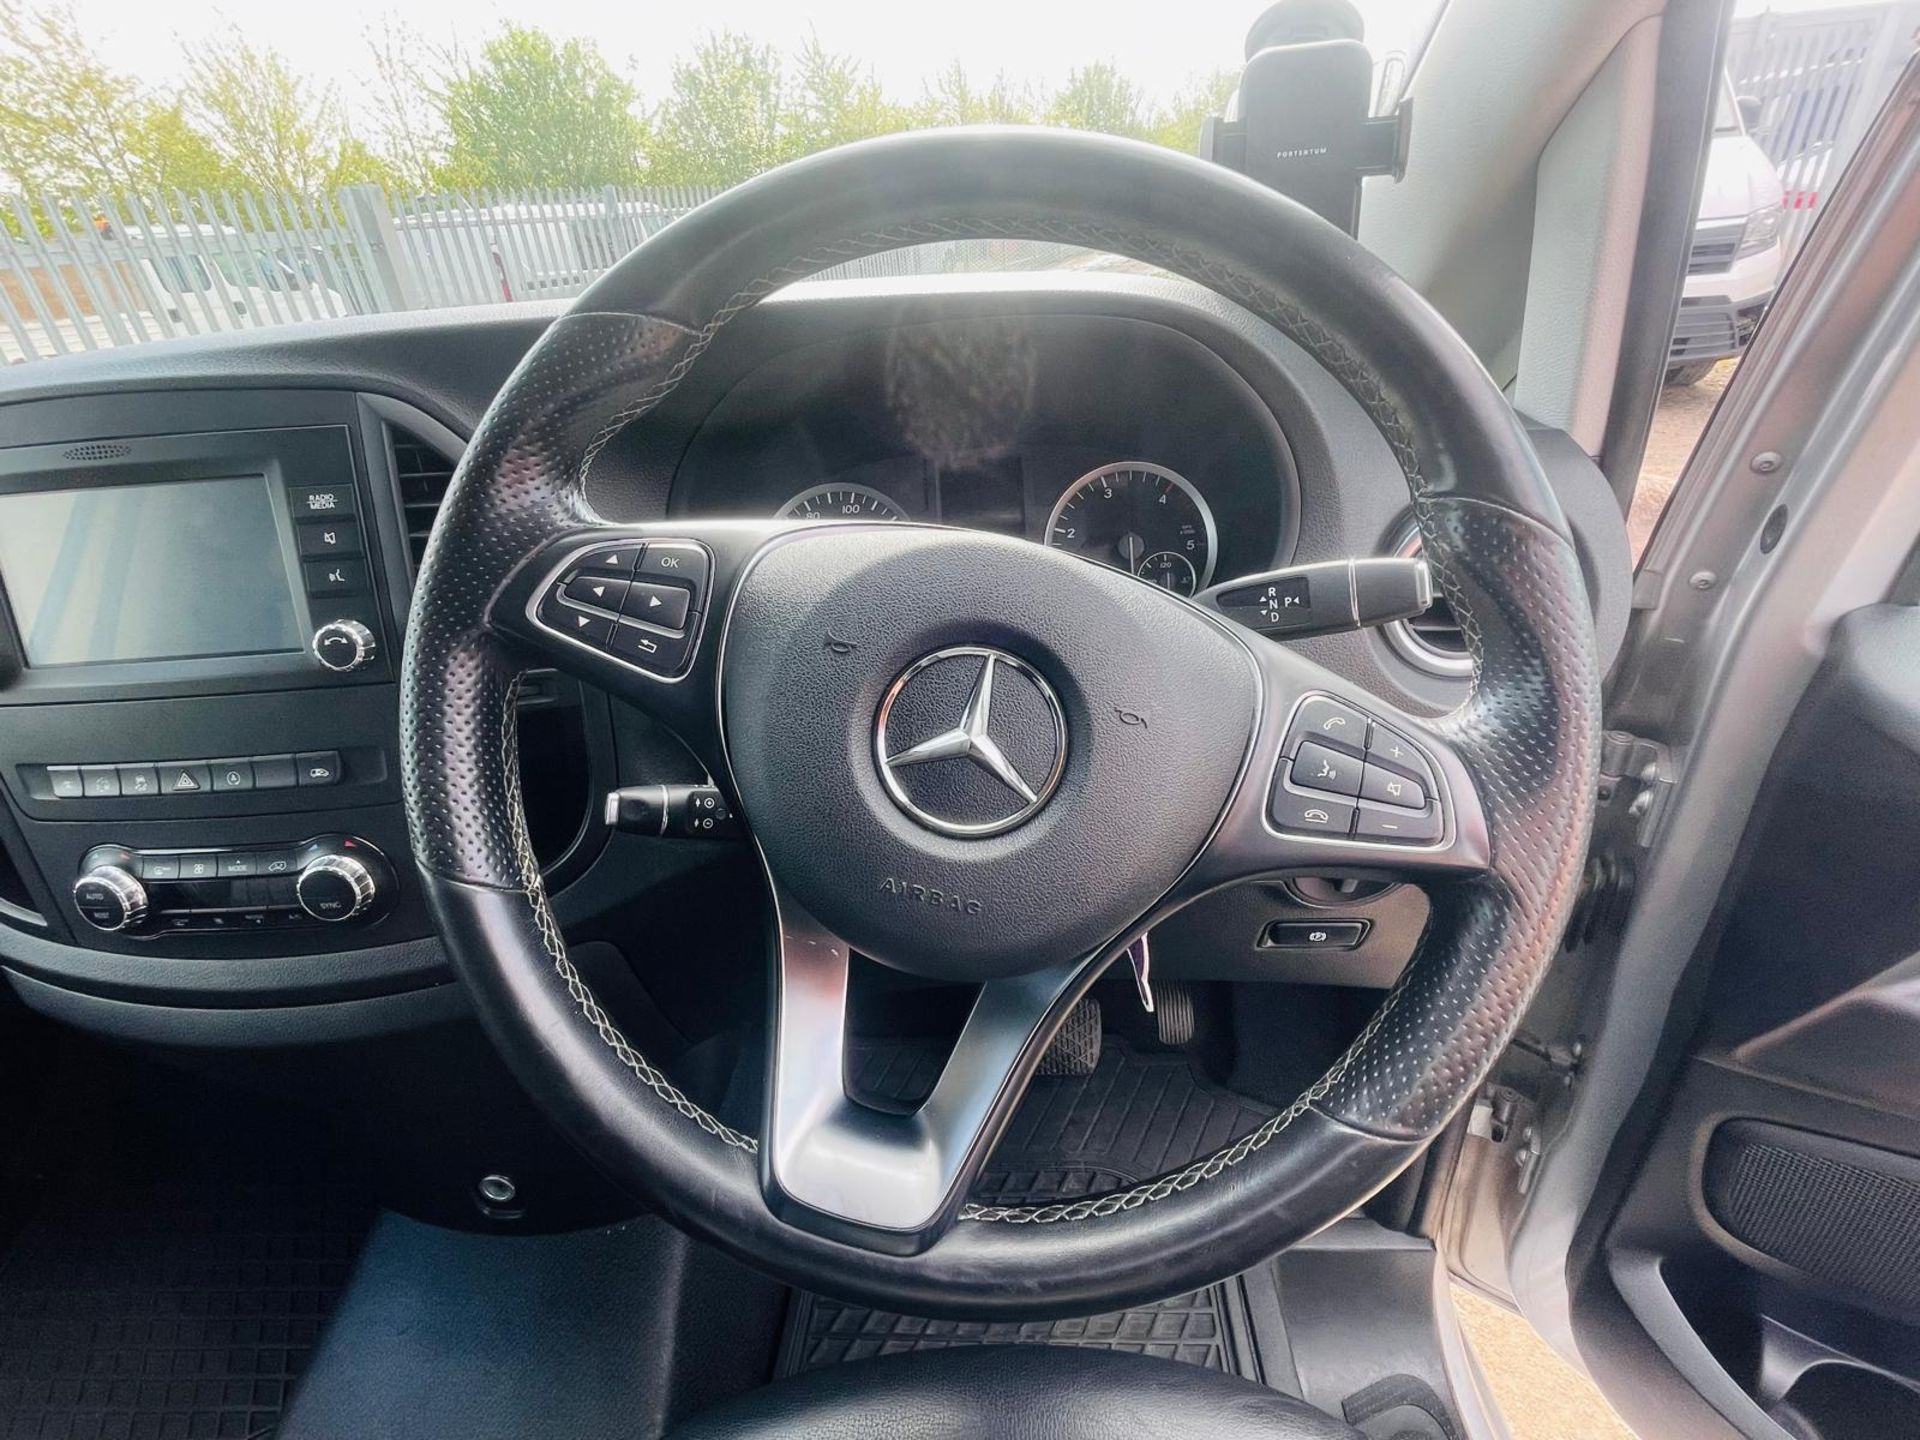 Mercedes-Benz Vito Premium 2.1 119 CDI 7G Tronic Crew Cab LWB Automatic 2019'19 Reg'- Alloy Wheels - Image 18 of 31